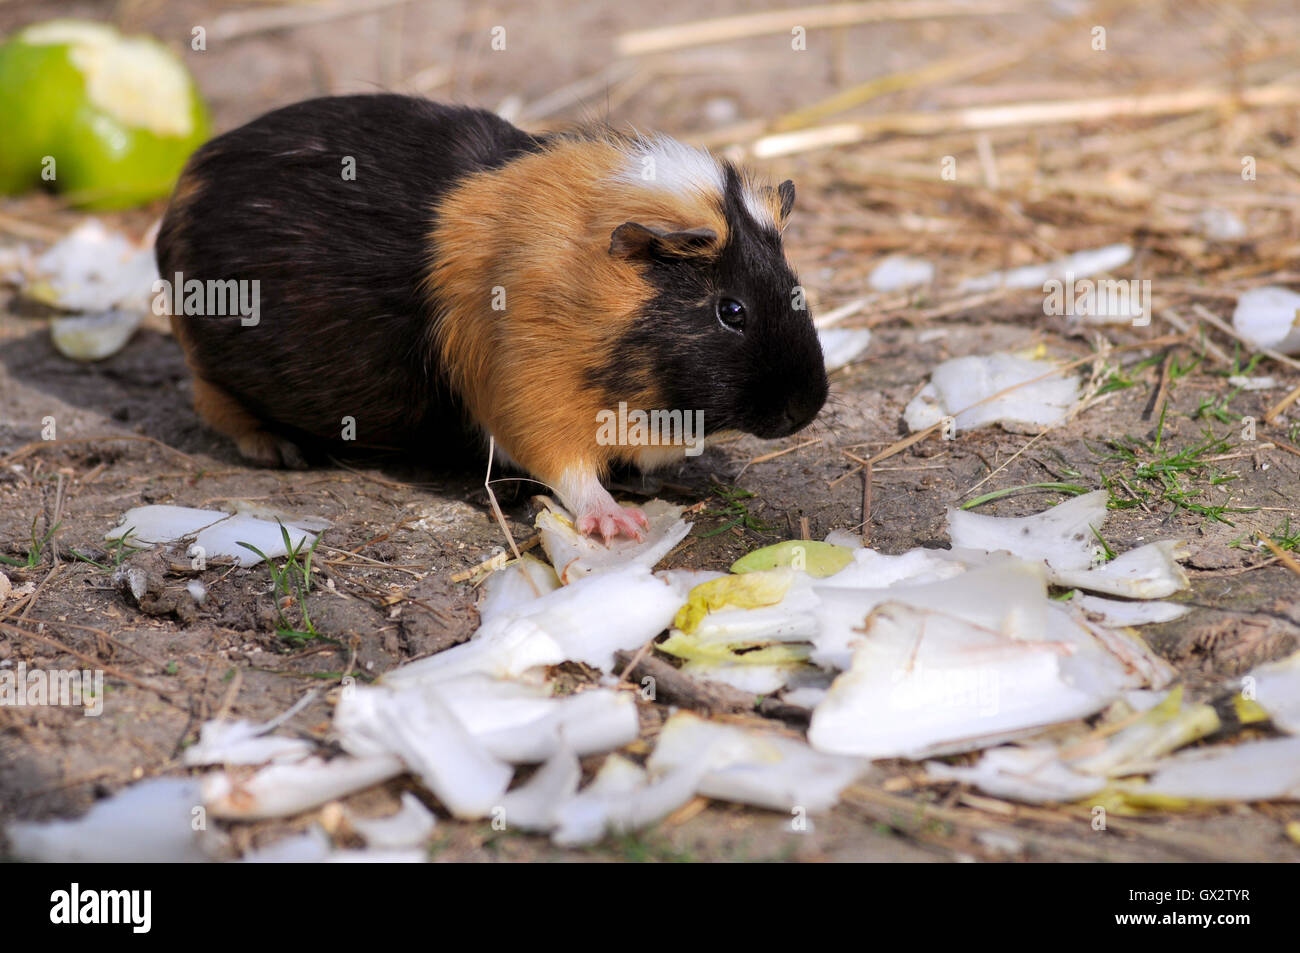 Closeup brown and black guinea pig (Cavia porcellus) eating endive Stock Photo